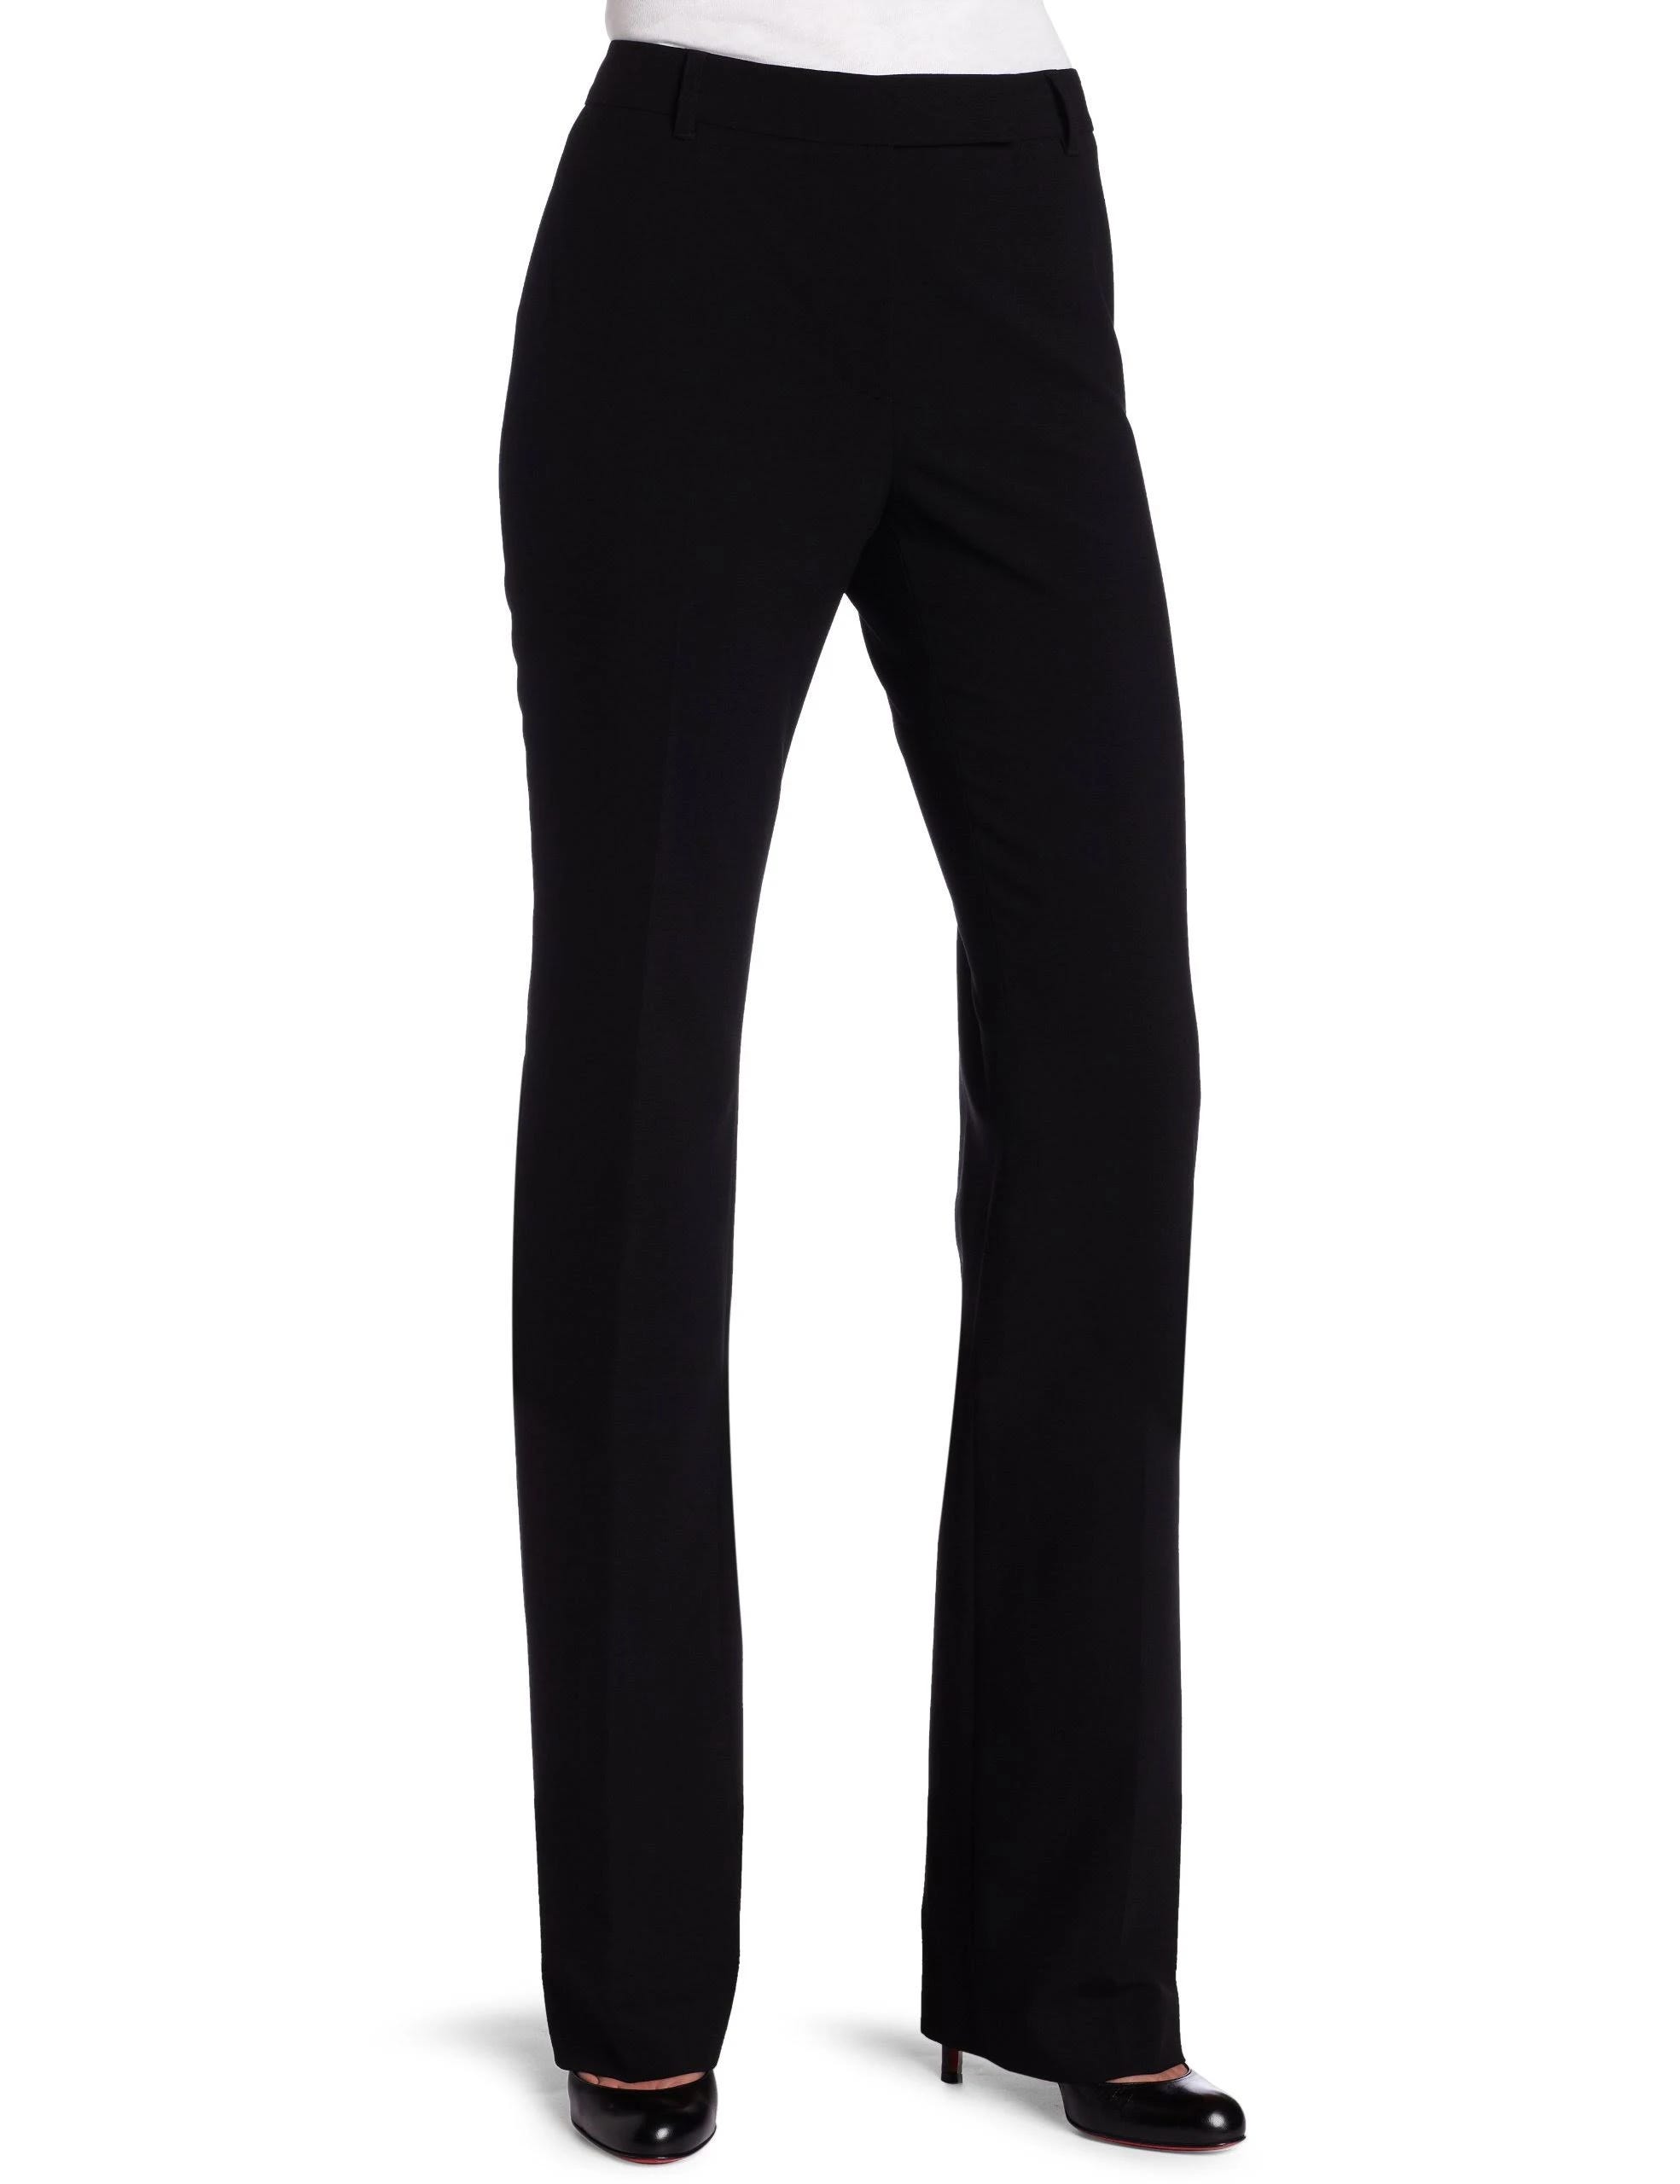 Comfortable Rayon Blend Black Dress Pants for Versatile Styling | Image